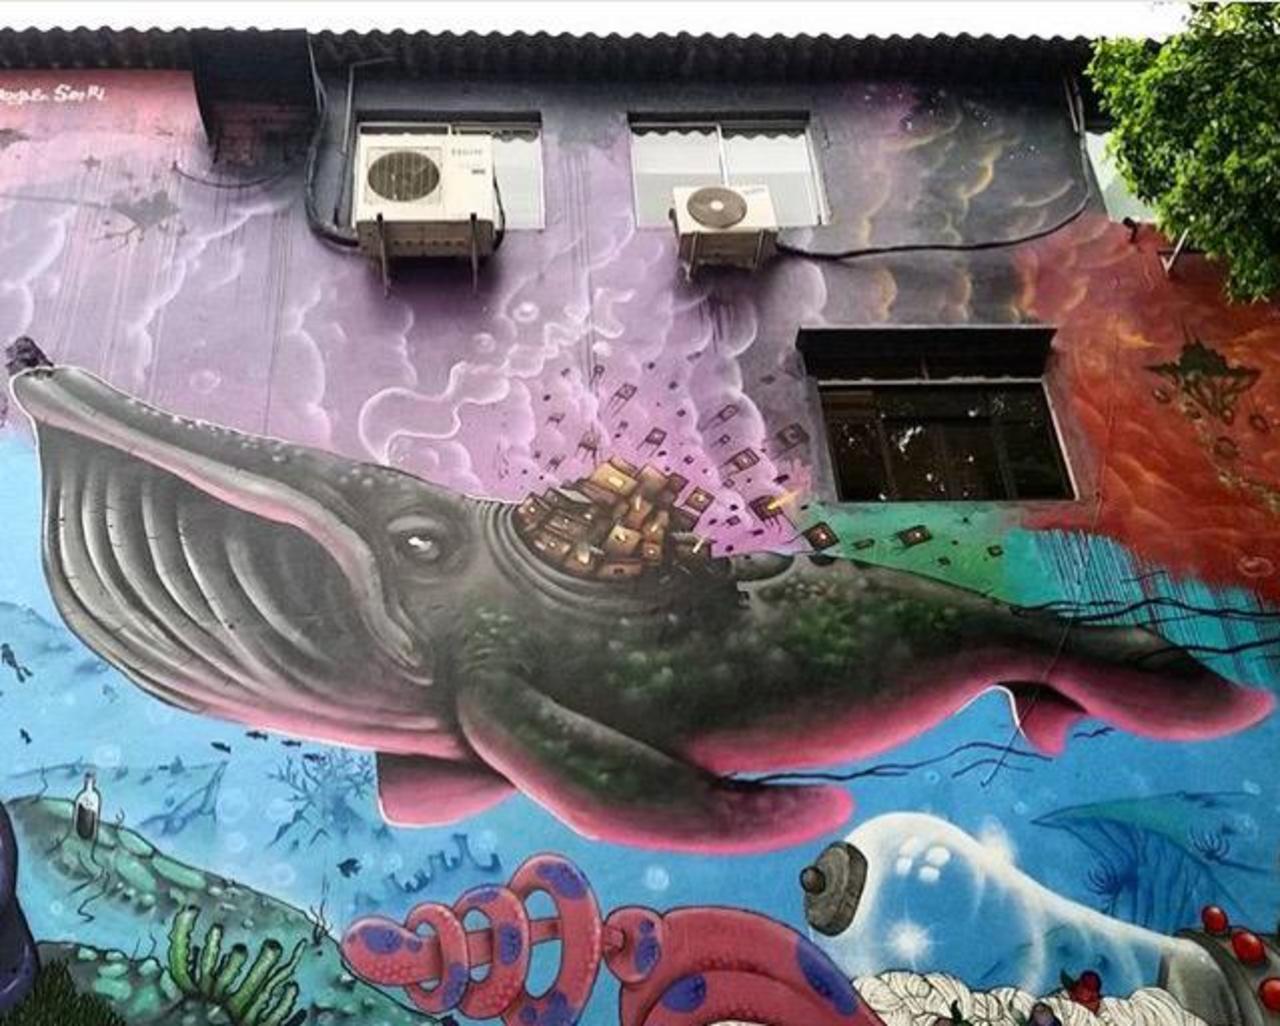 Street Art by joks_johnes Pinheiros, São Paulo 

#art #mural #graffiti #streetart http://t.co/eem9nahejc